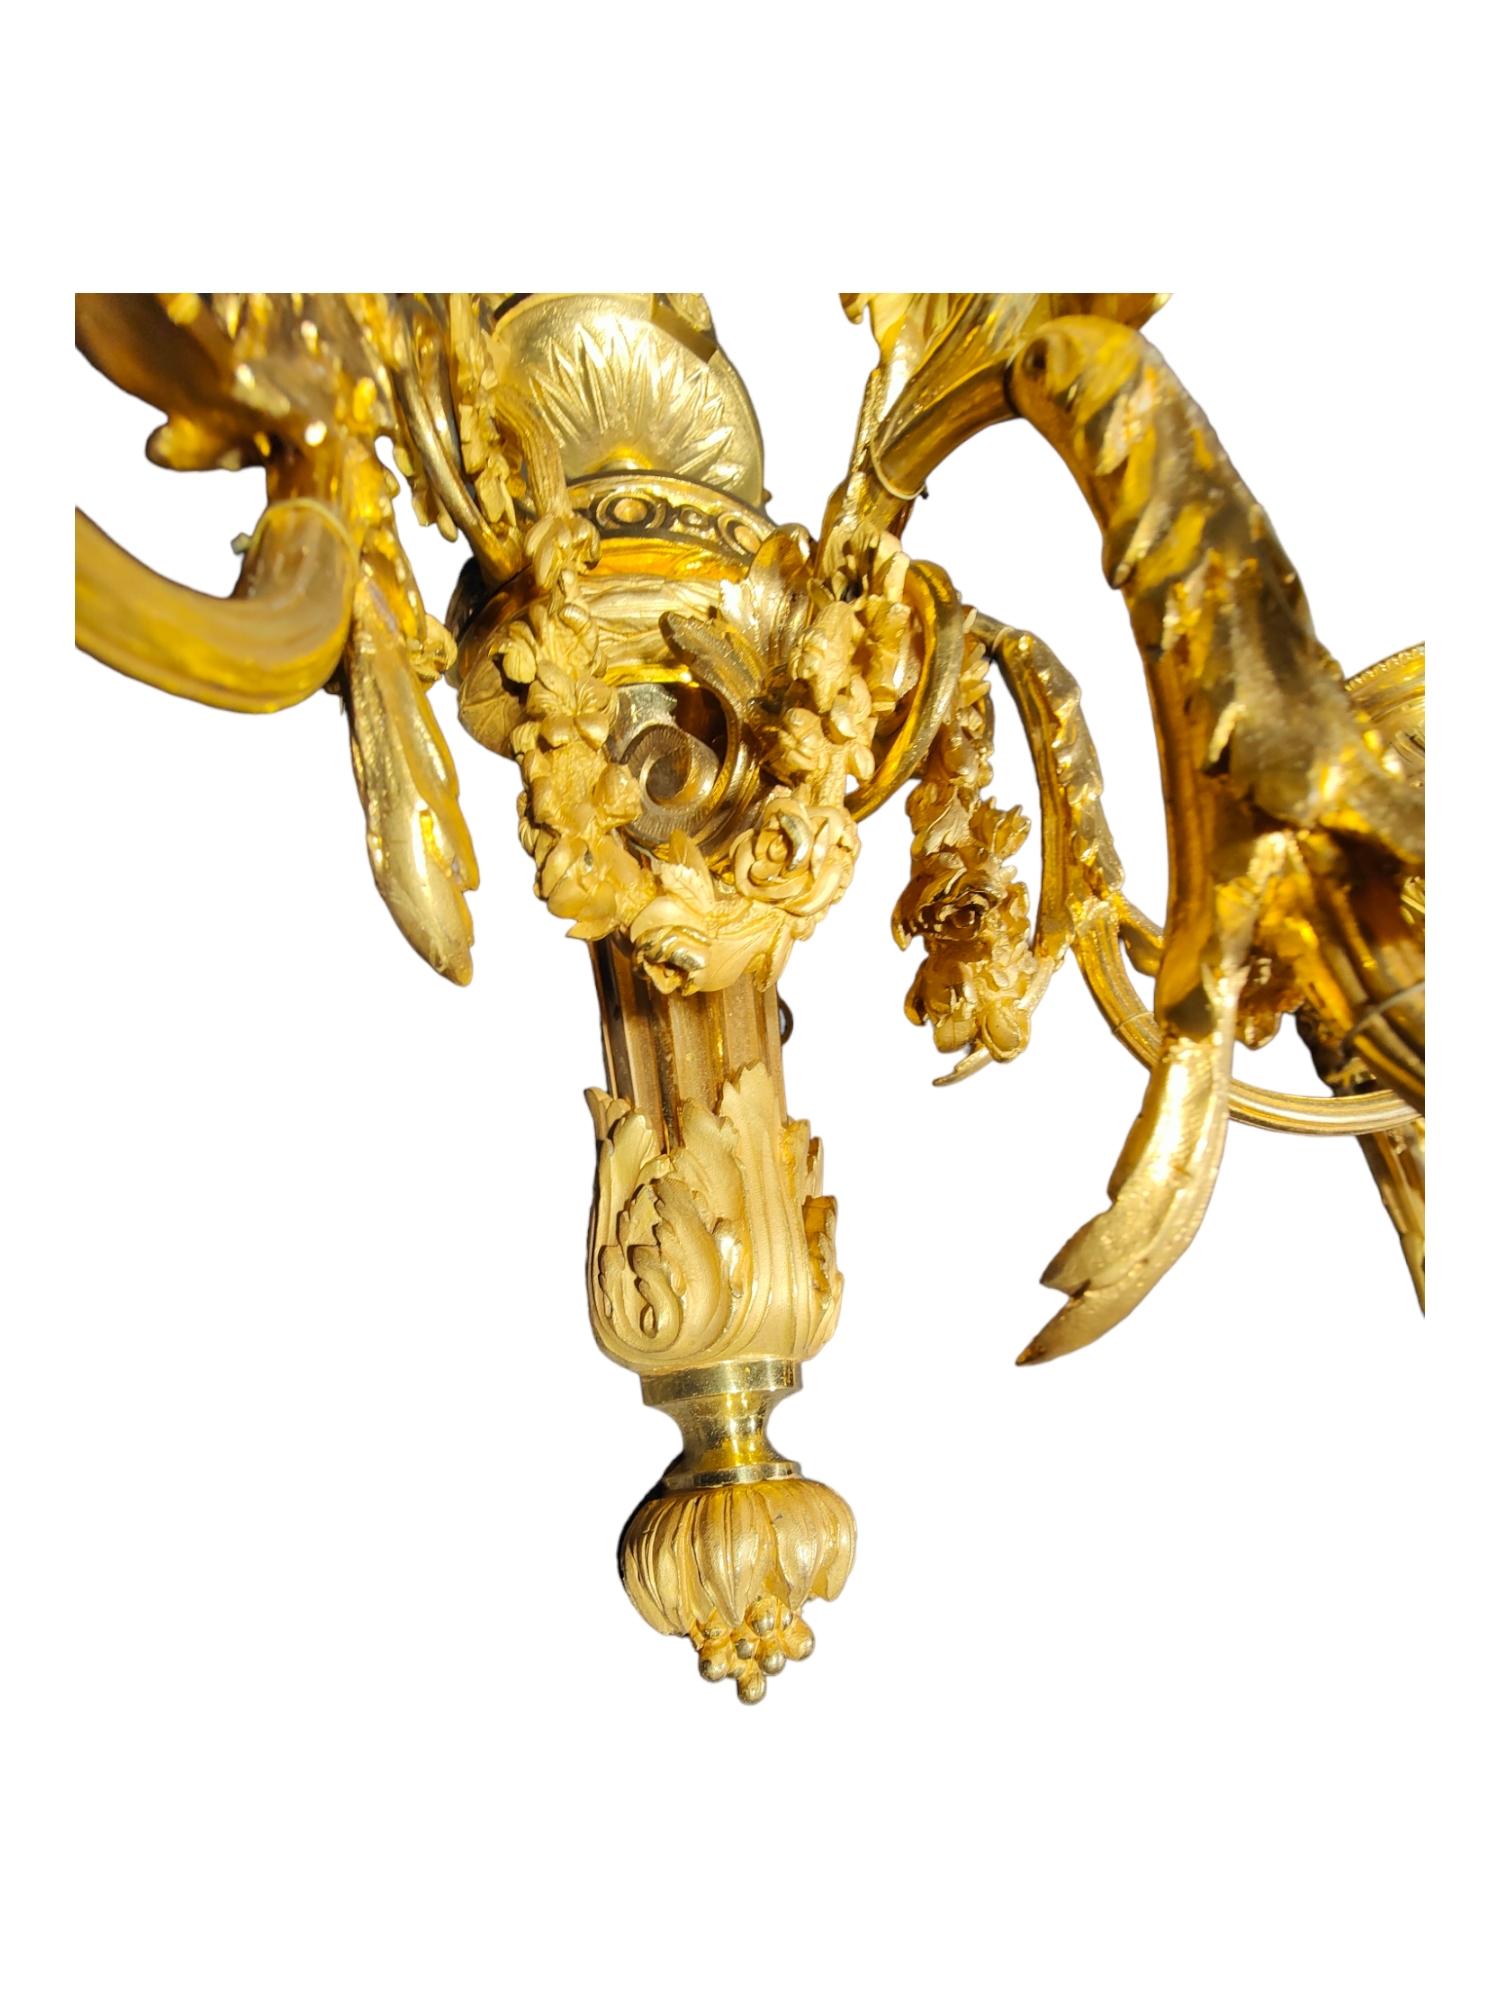 Pair of Sconces in Gilded Bronze Italian Empire Period Eighteenth Century For Sale 2